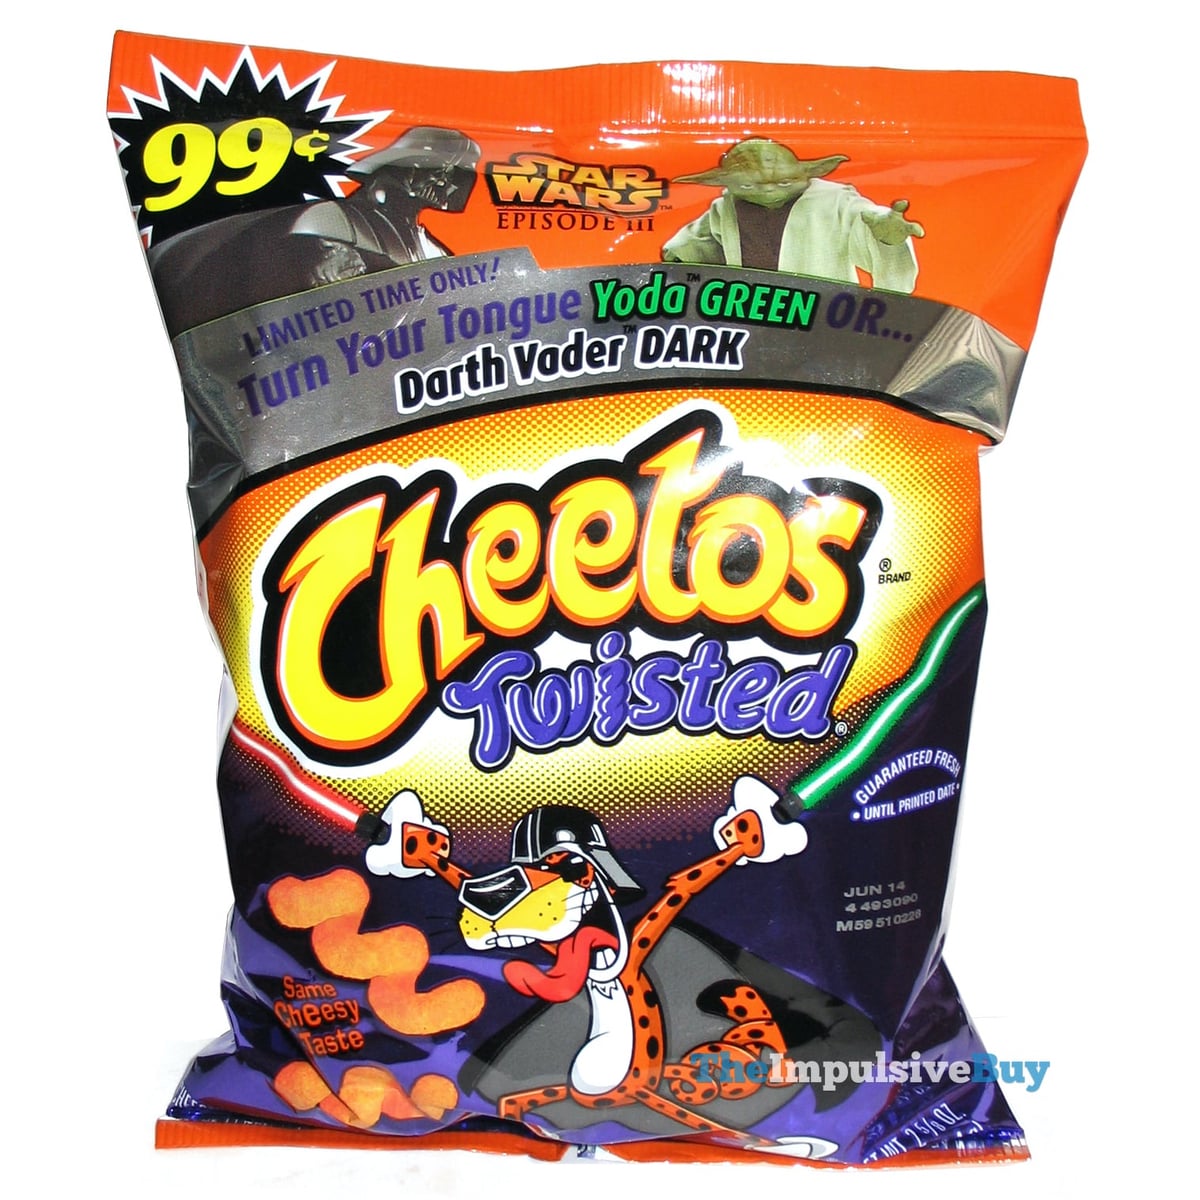 Doritos Xxtra Flamin' Hot Nacho vs Cheetos Flamin' Hot Spicy Pepper Puffs, 2021-05-03